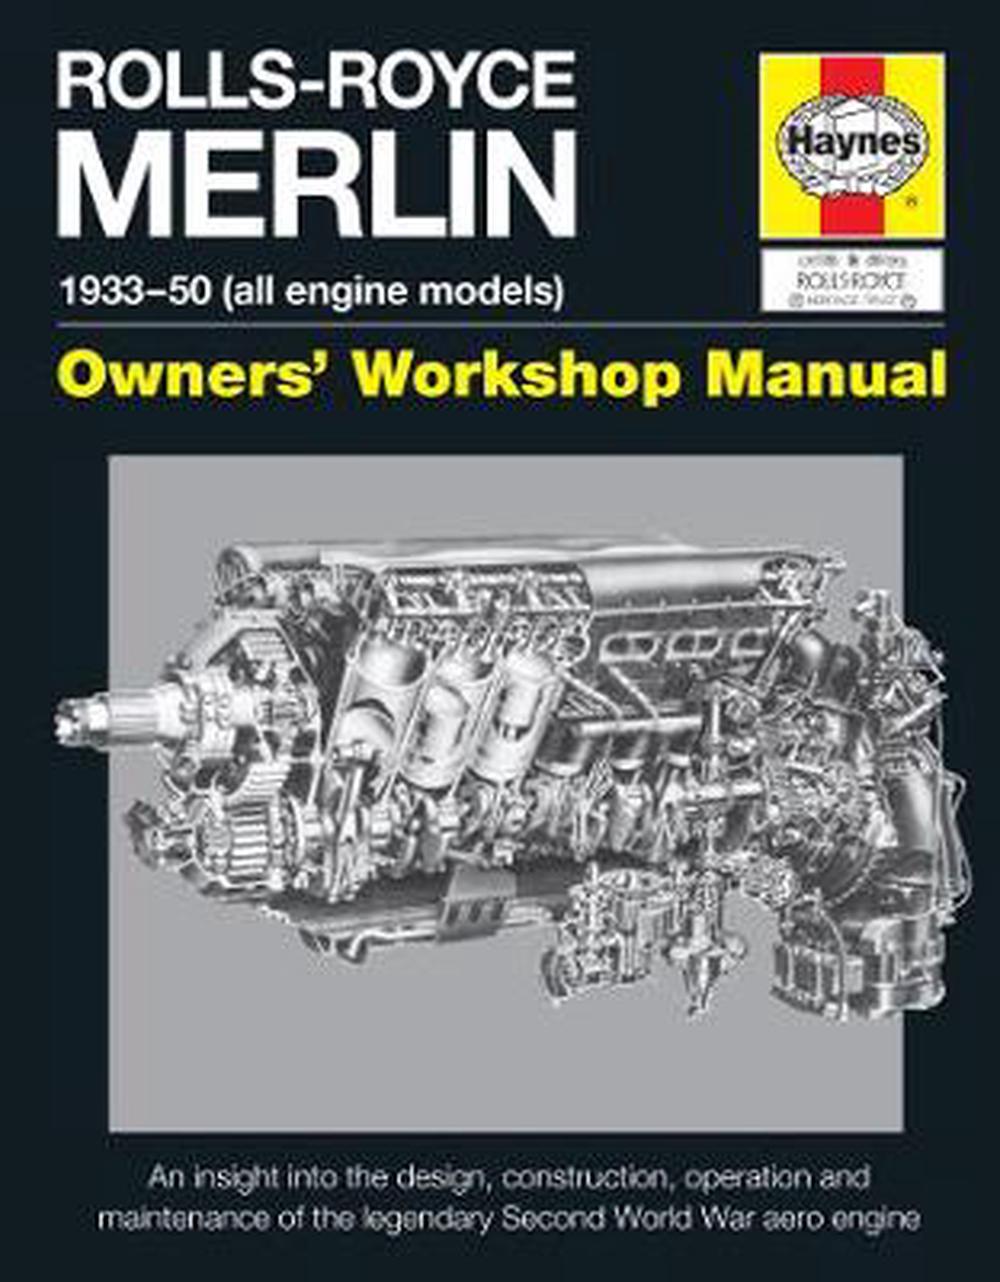 Rolls-Royce Merlin Manual by Ian Craighead, Hardcover, 9780857337580